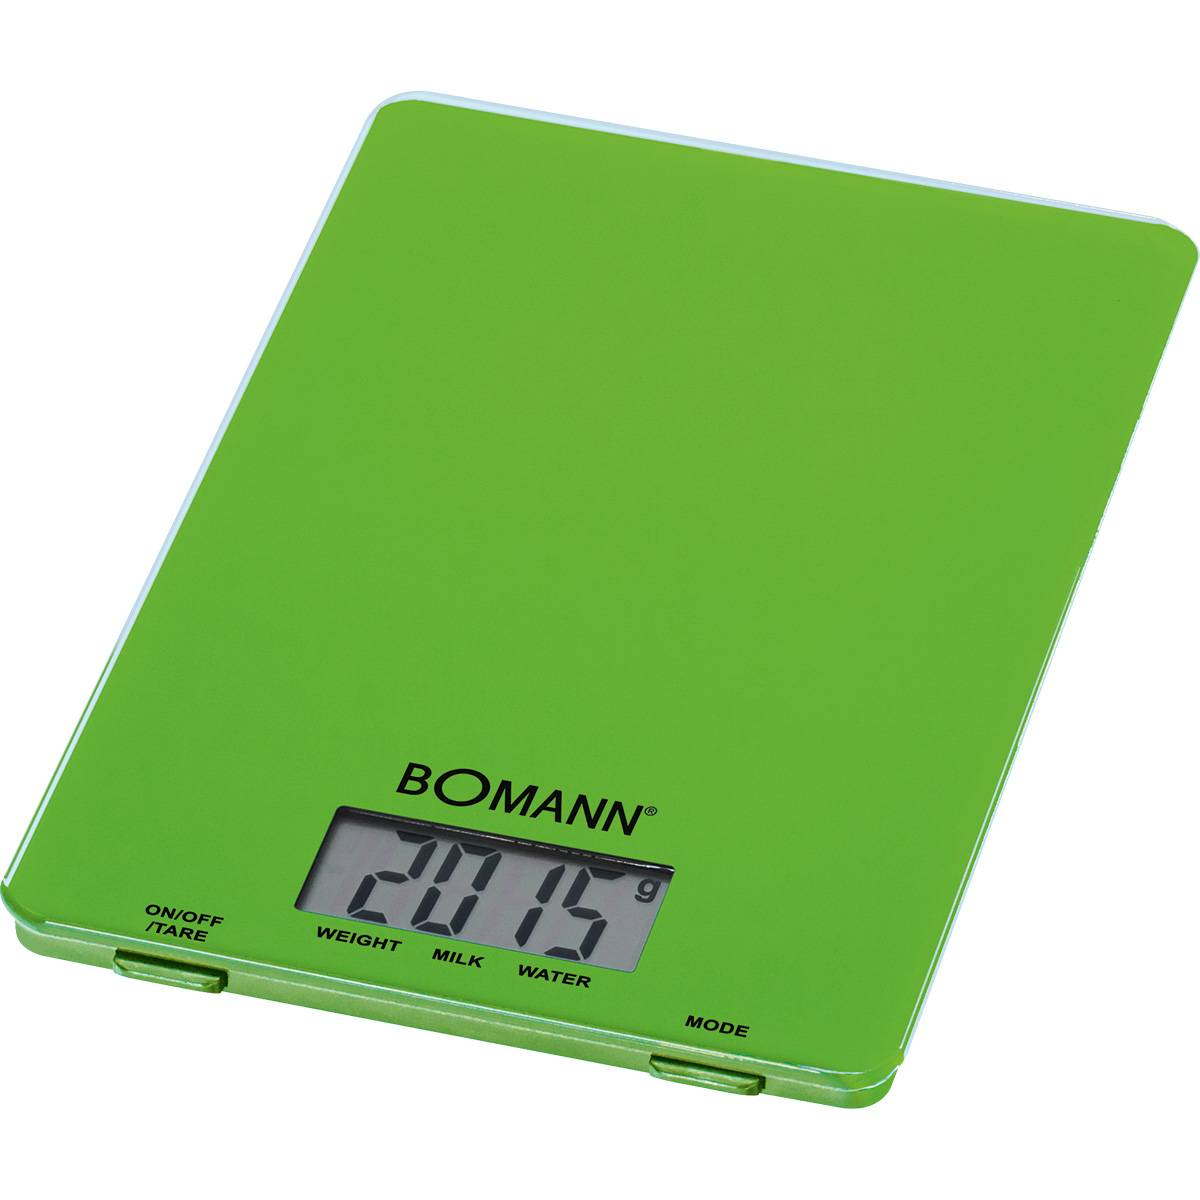 Bomann Kw 1515 de cocina digital verde cb – color balanza extraplana 1gr hasta 5 kg lcd tara 1